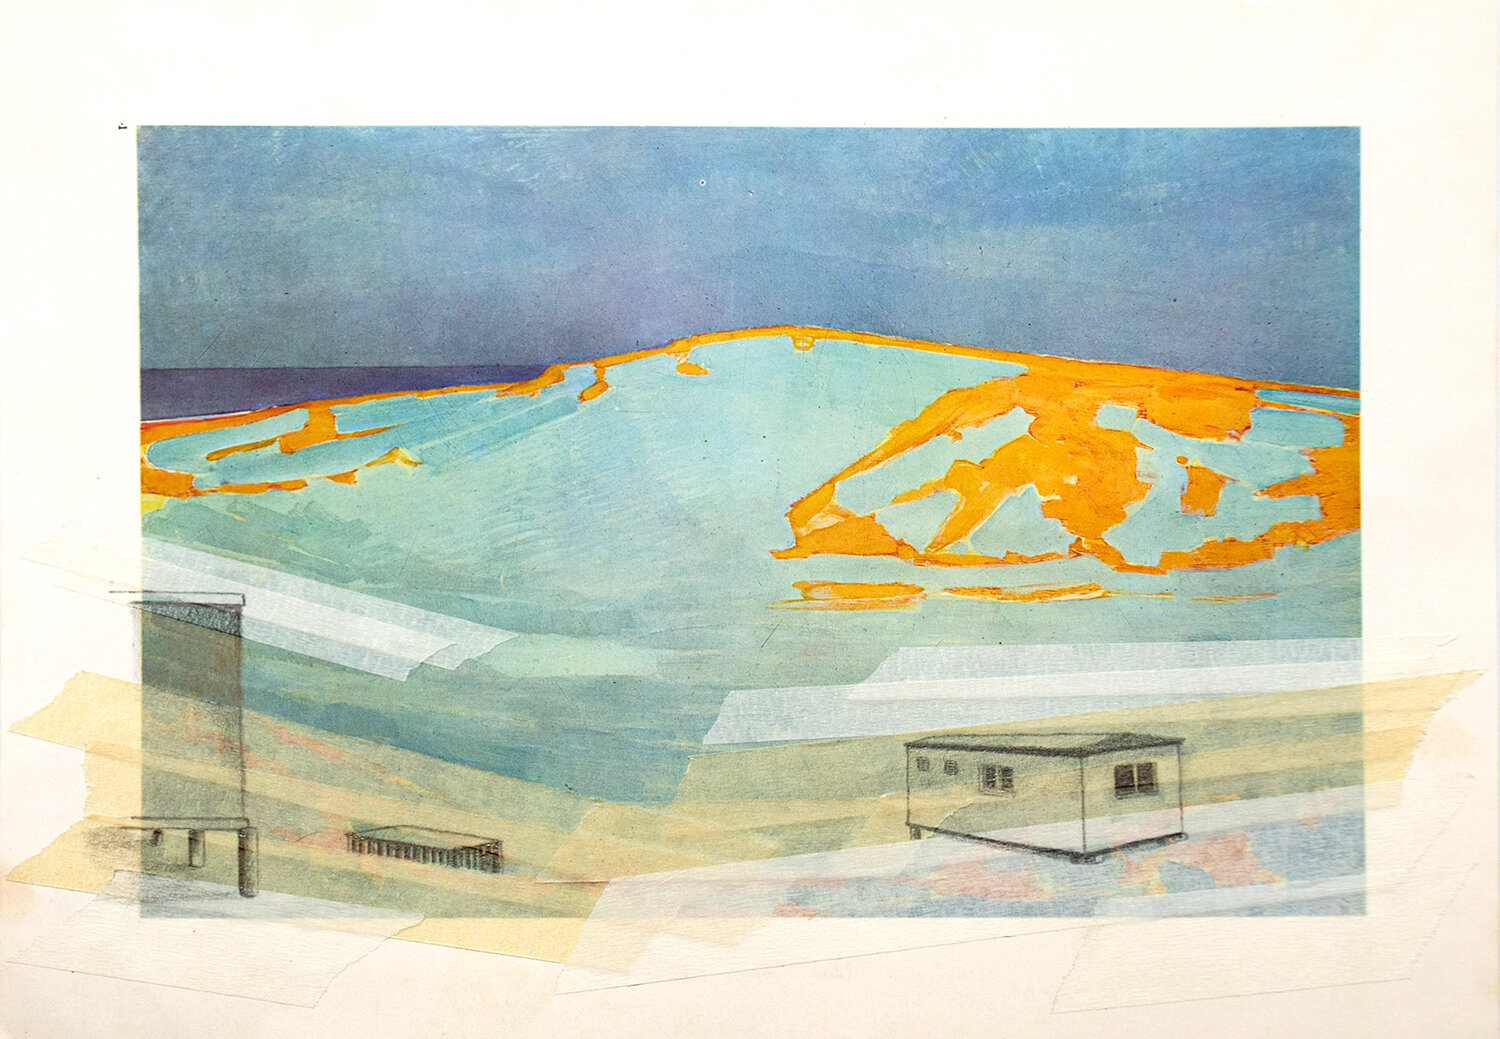 The redemption of Piet Mondrian’s Sand dunes (1910), Pencil amd Maskingtape on a digital print, 2013